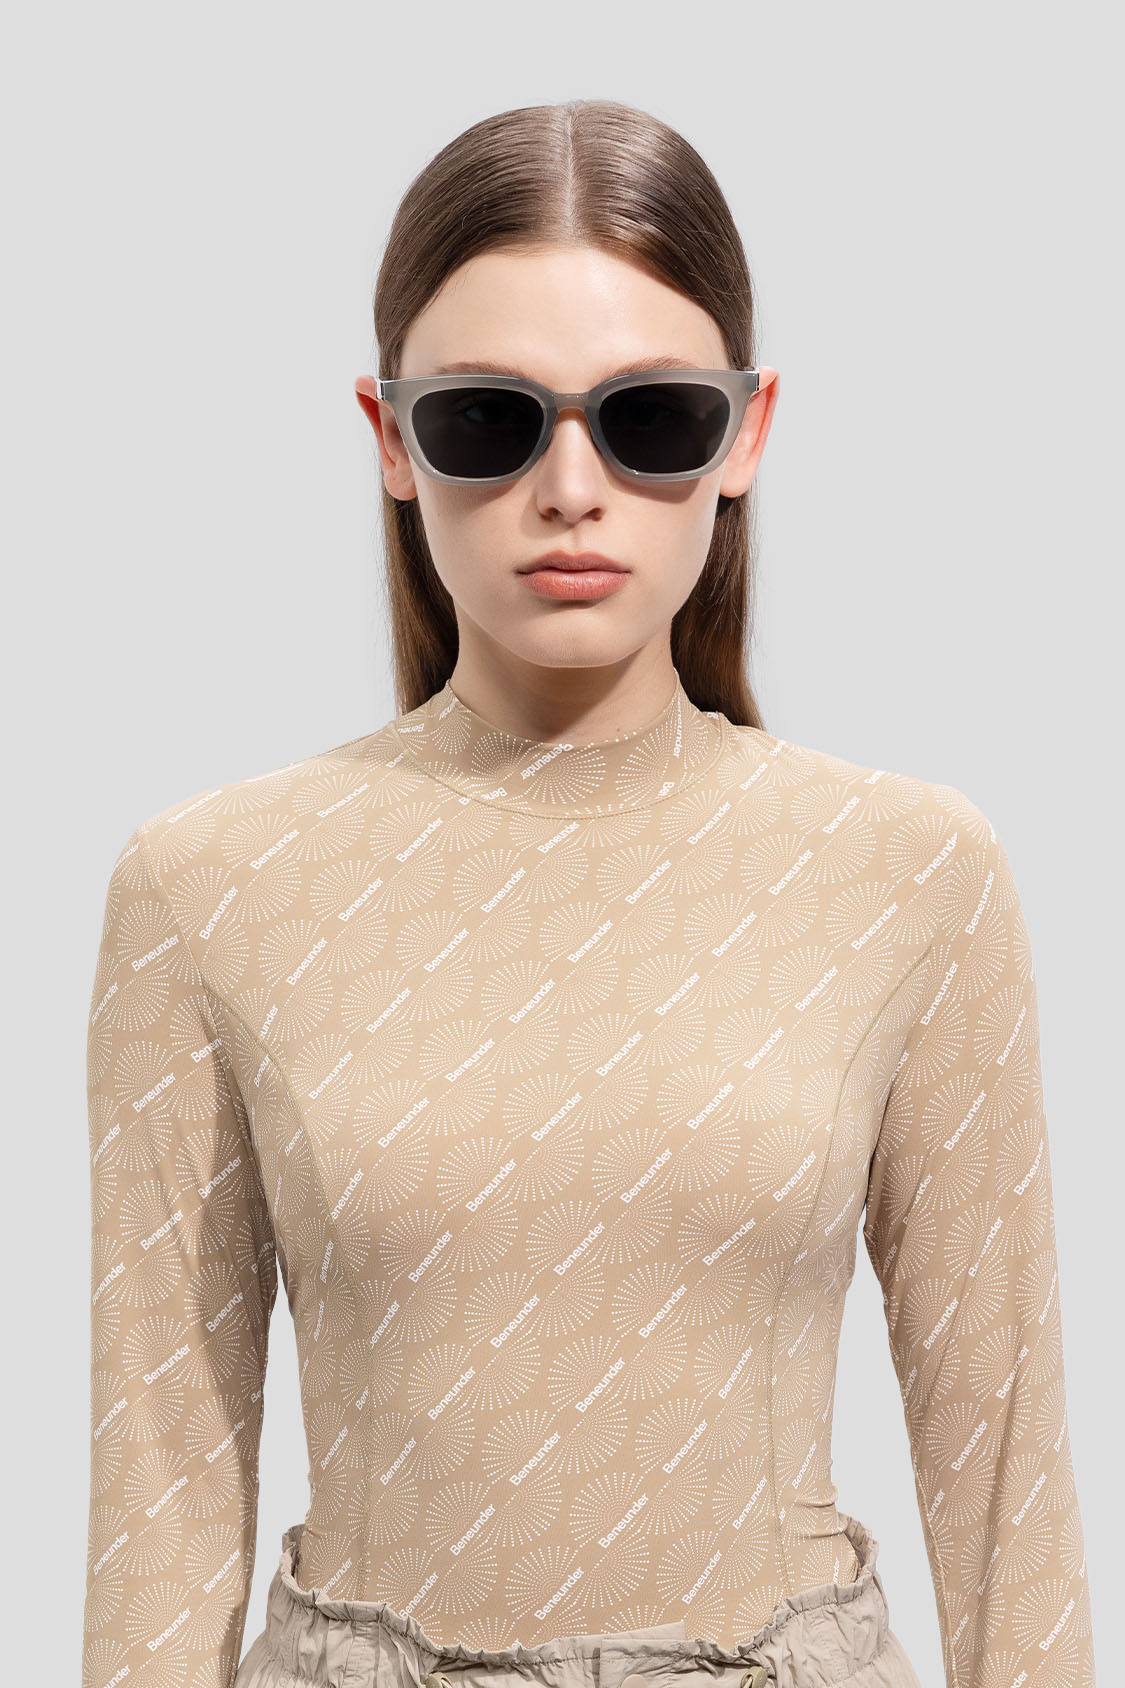 beneunder women's sunglasses foldable #color_mocha gray